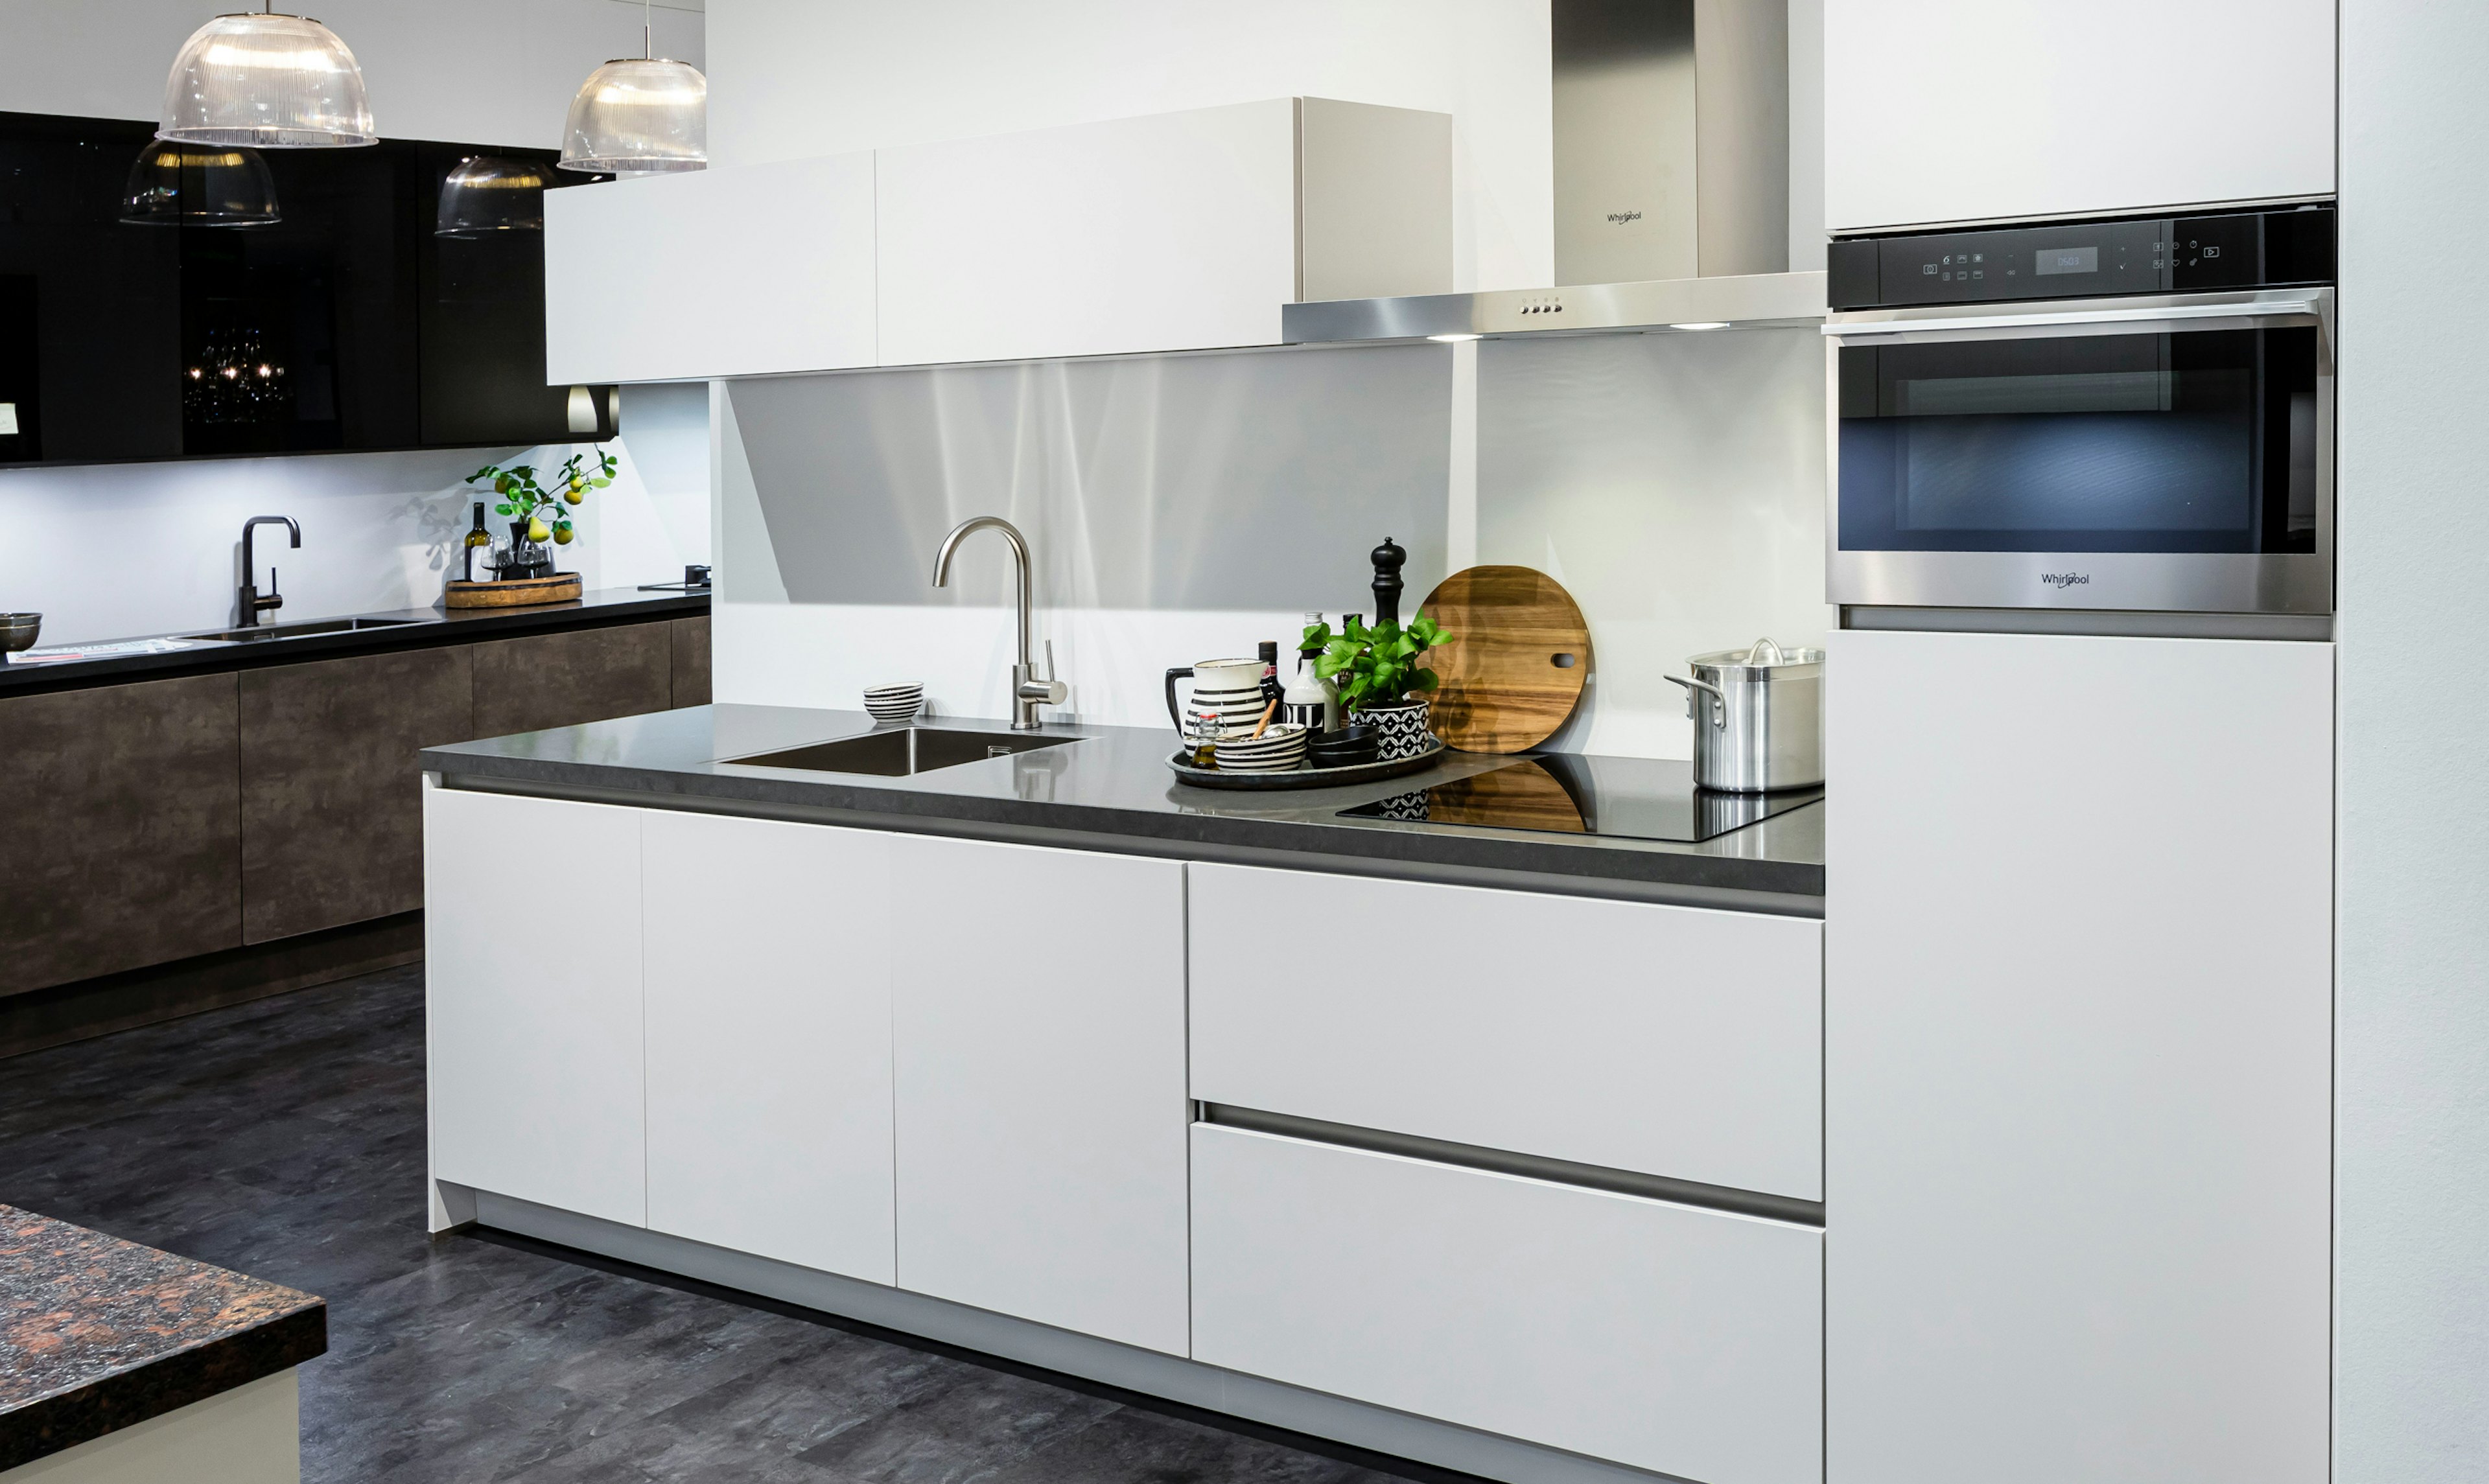 Reserve droog Vuiligheid Kleine keukens: voor beperkte kleine ruimtes | Bemmel & Kroon